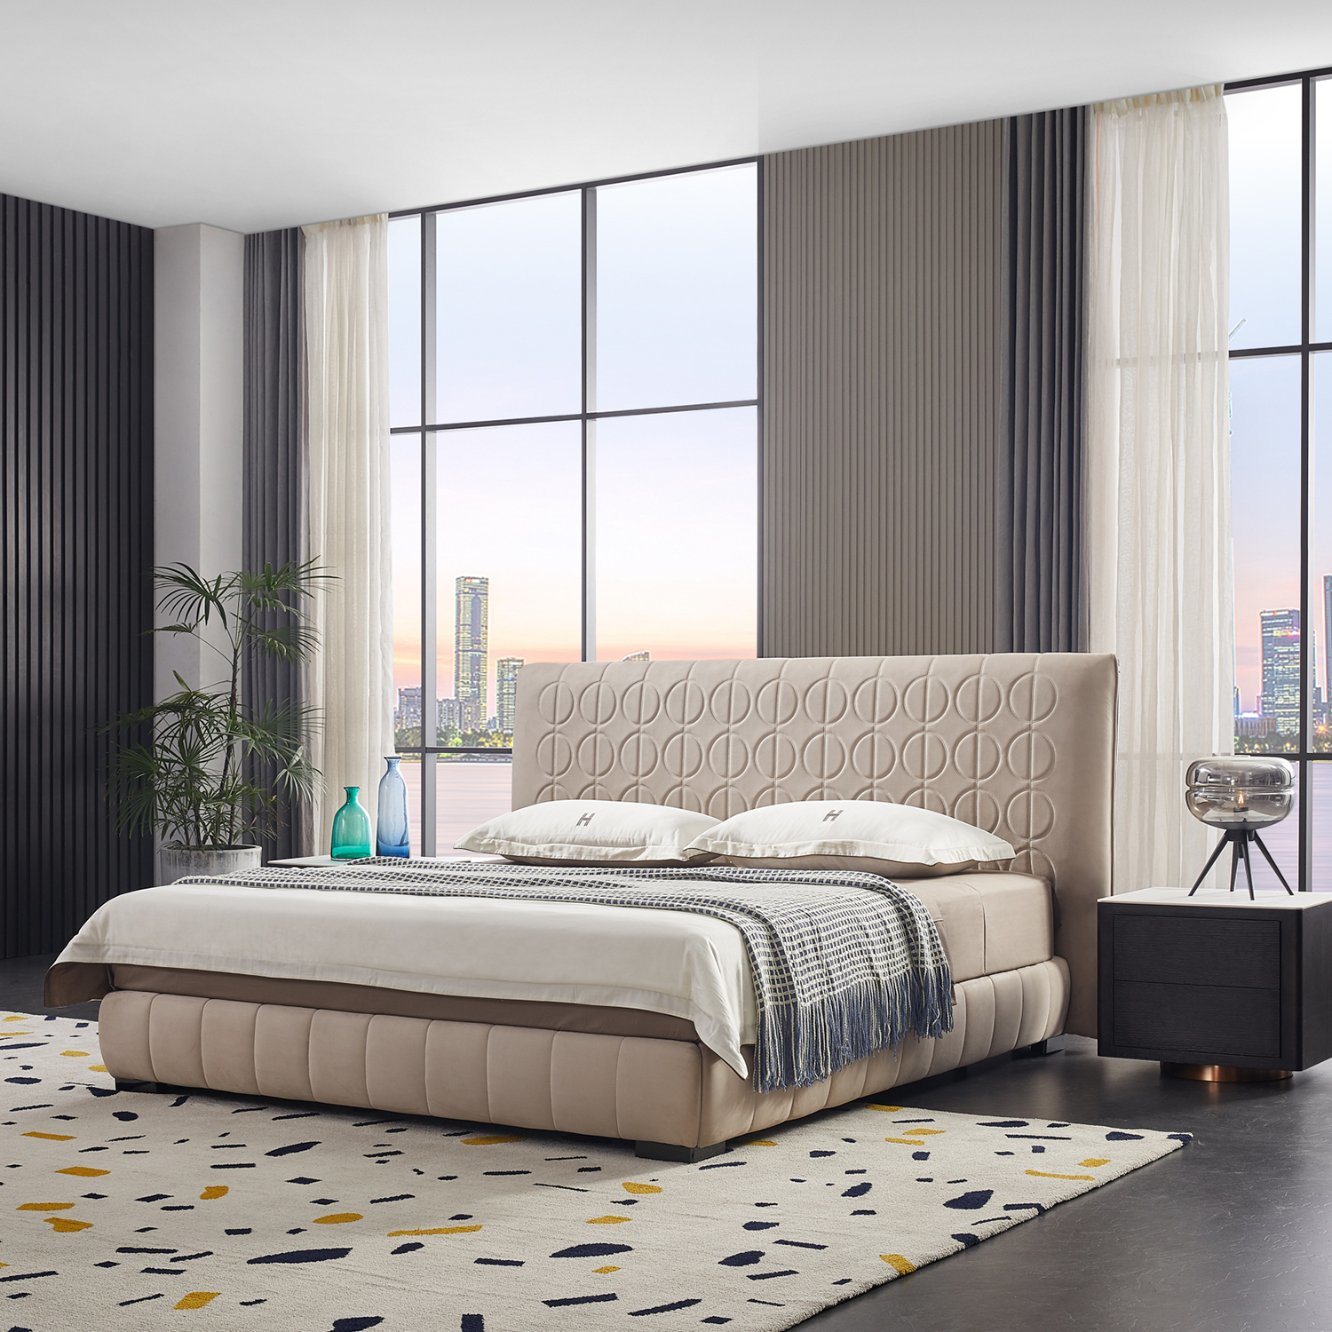 Modern Home Hotel Wooden Leather Bed Bedroom Furniture